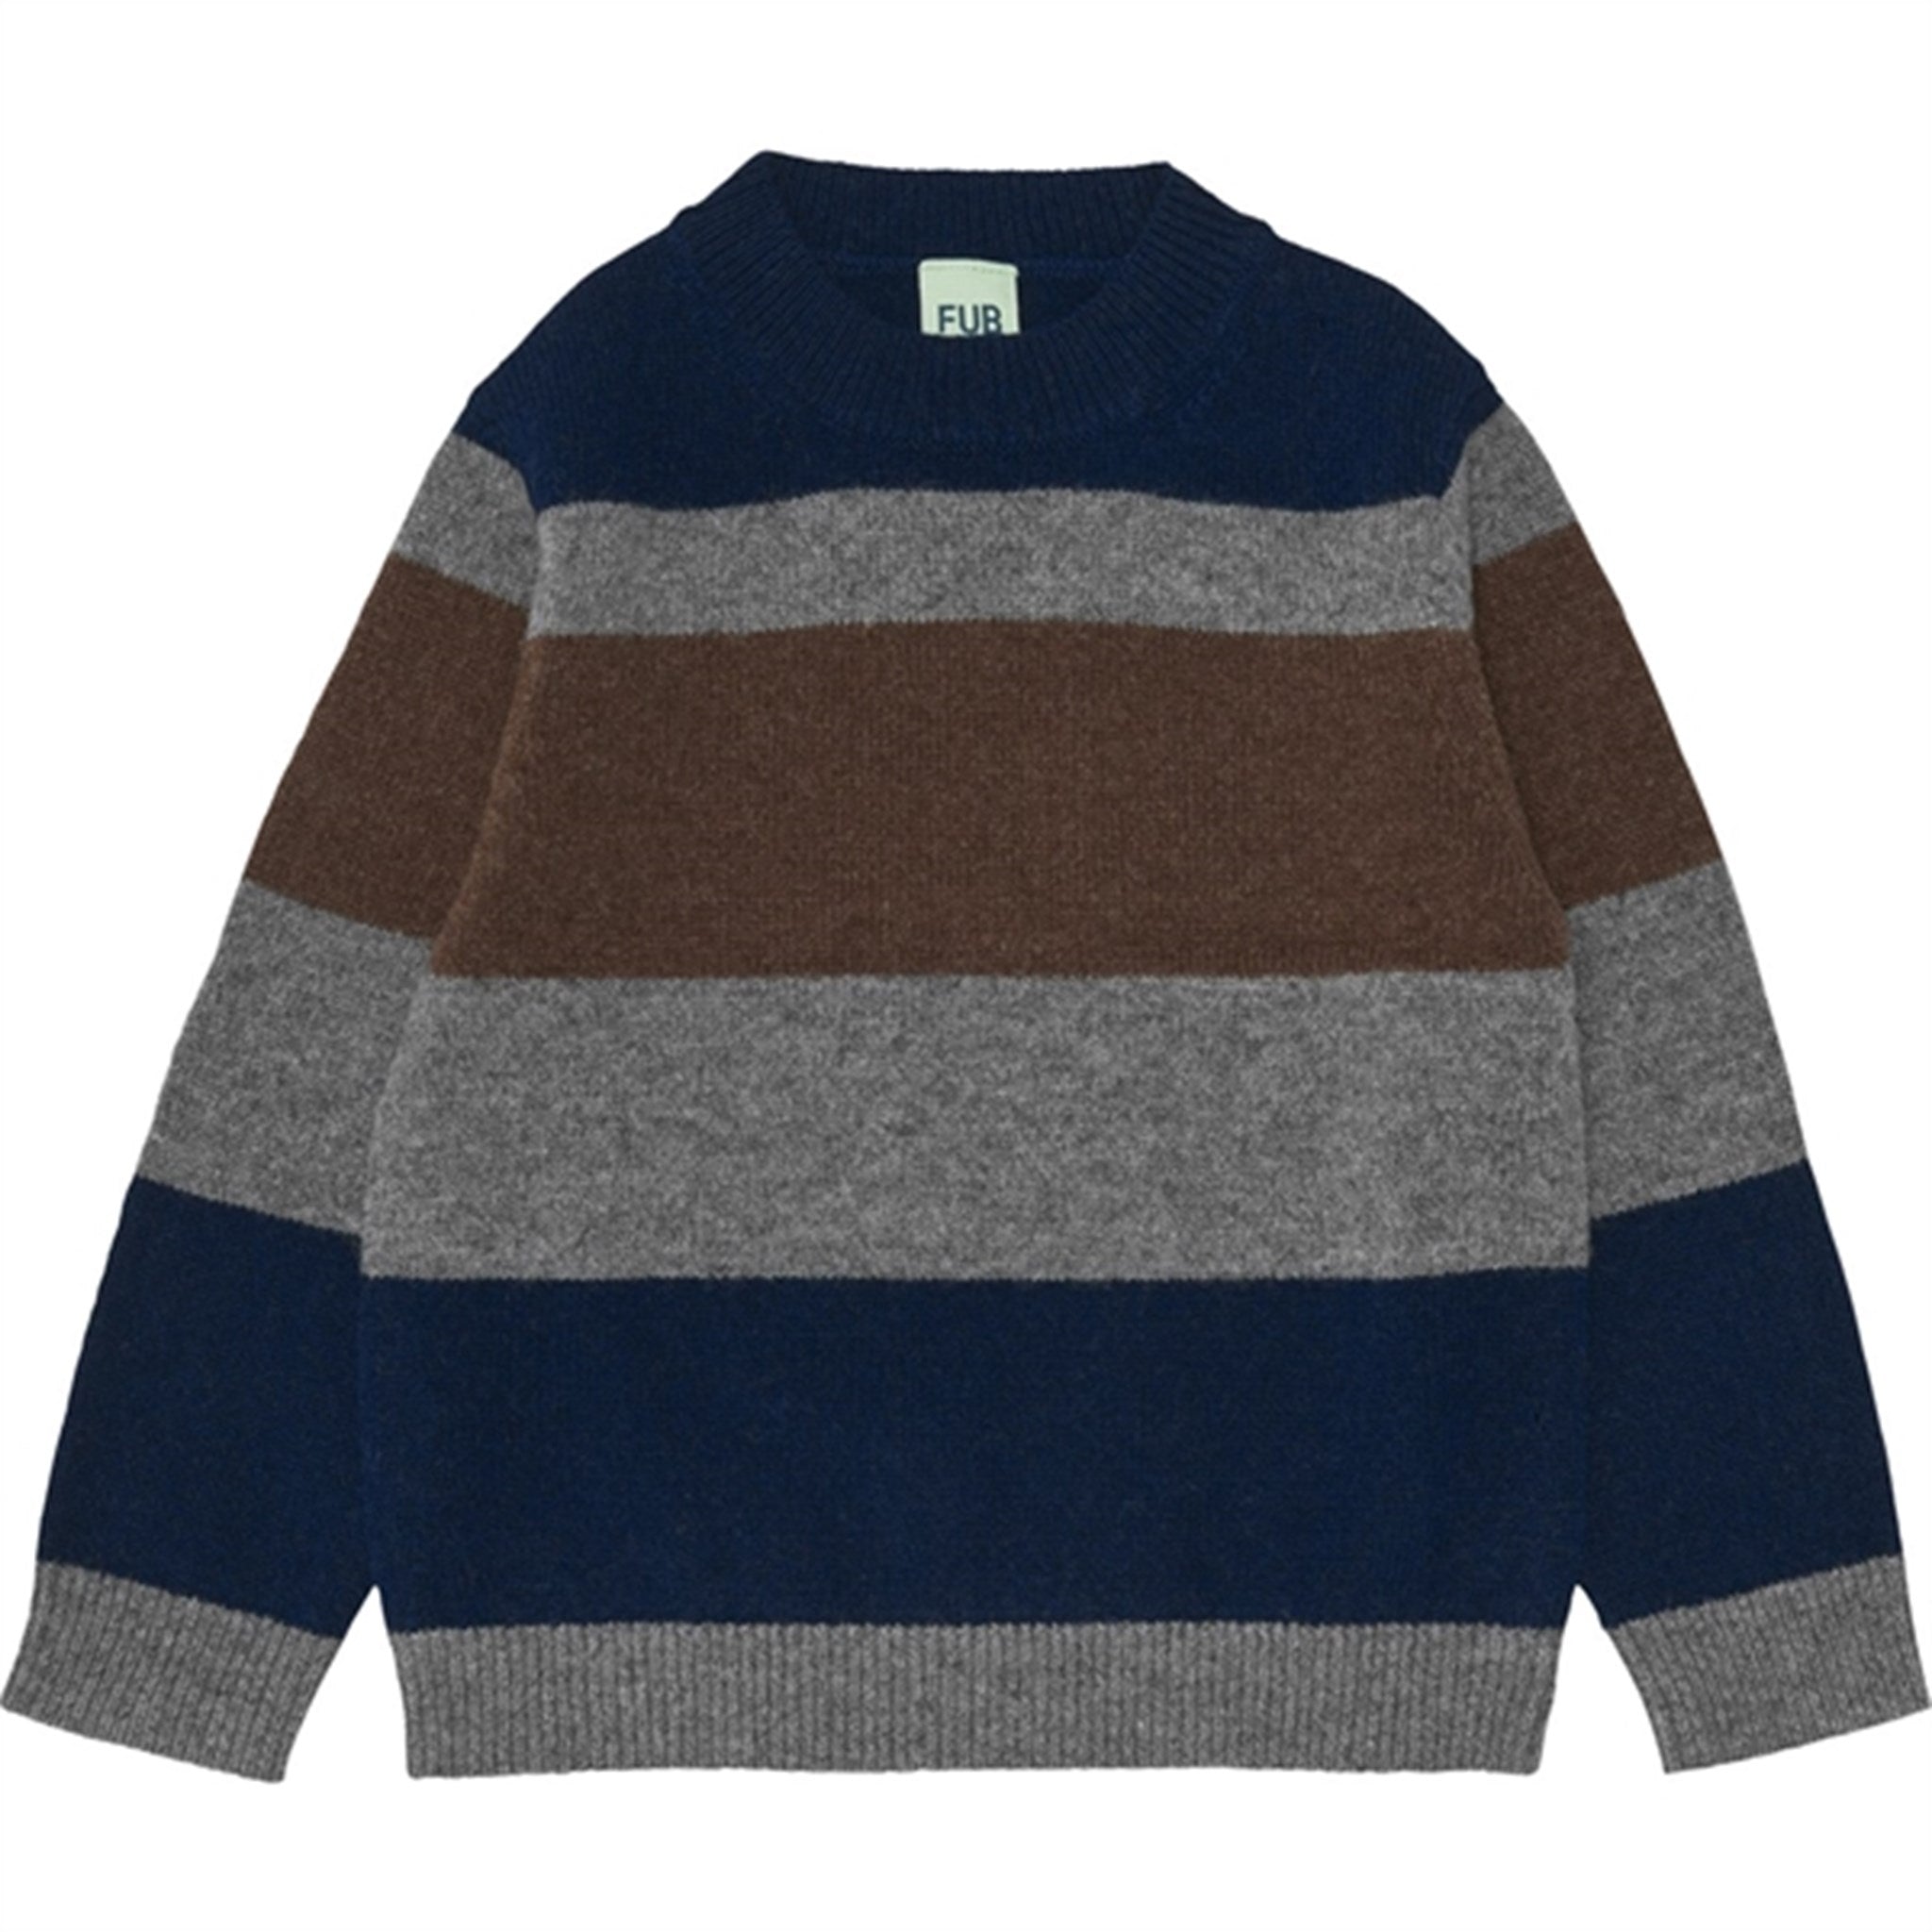 FUB Lammull Sweatshirt Stripe